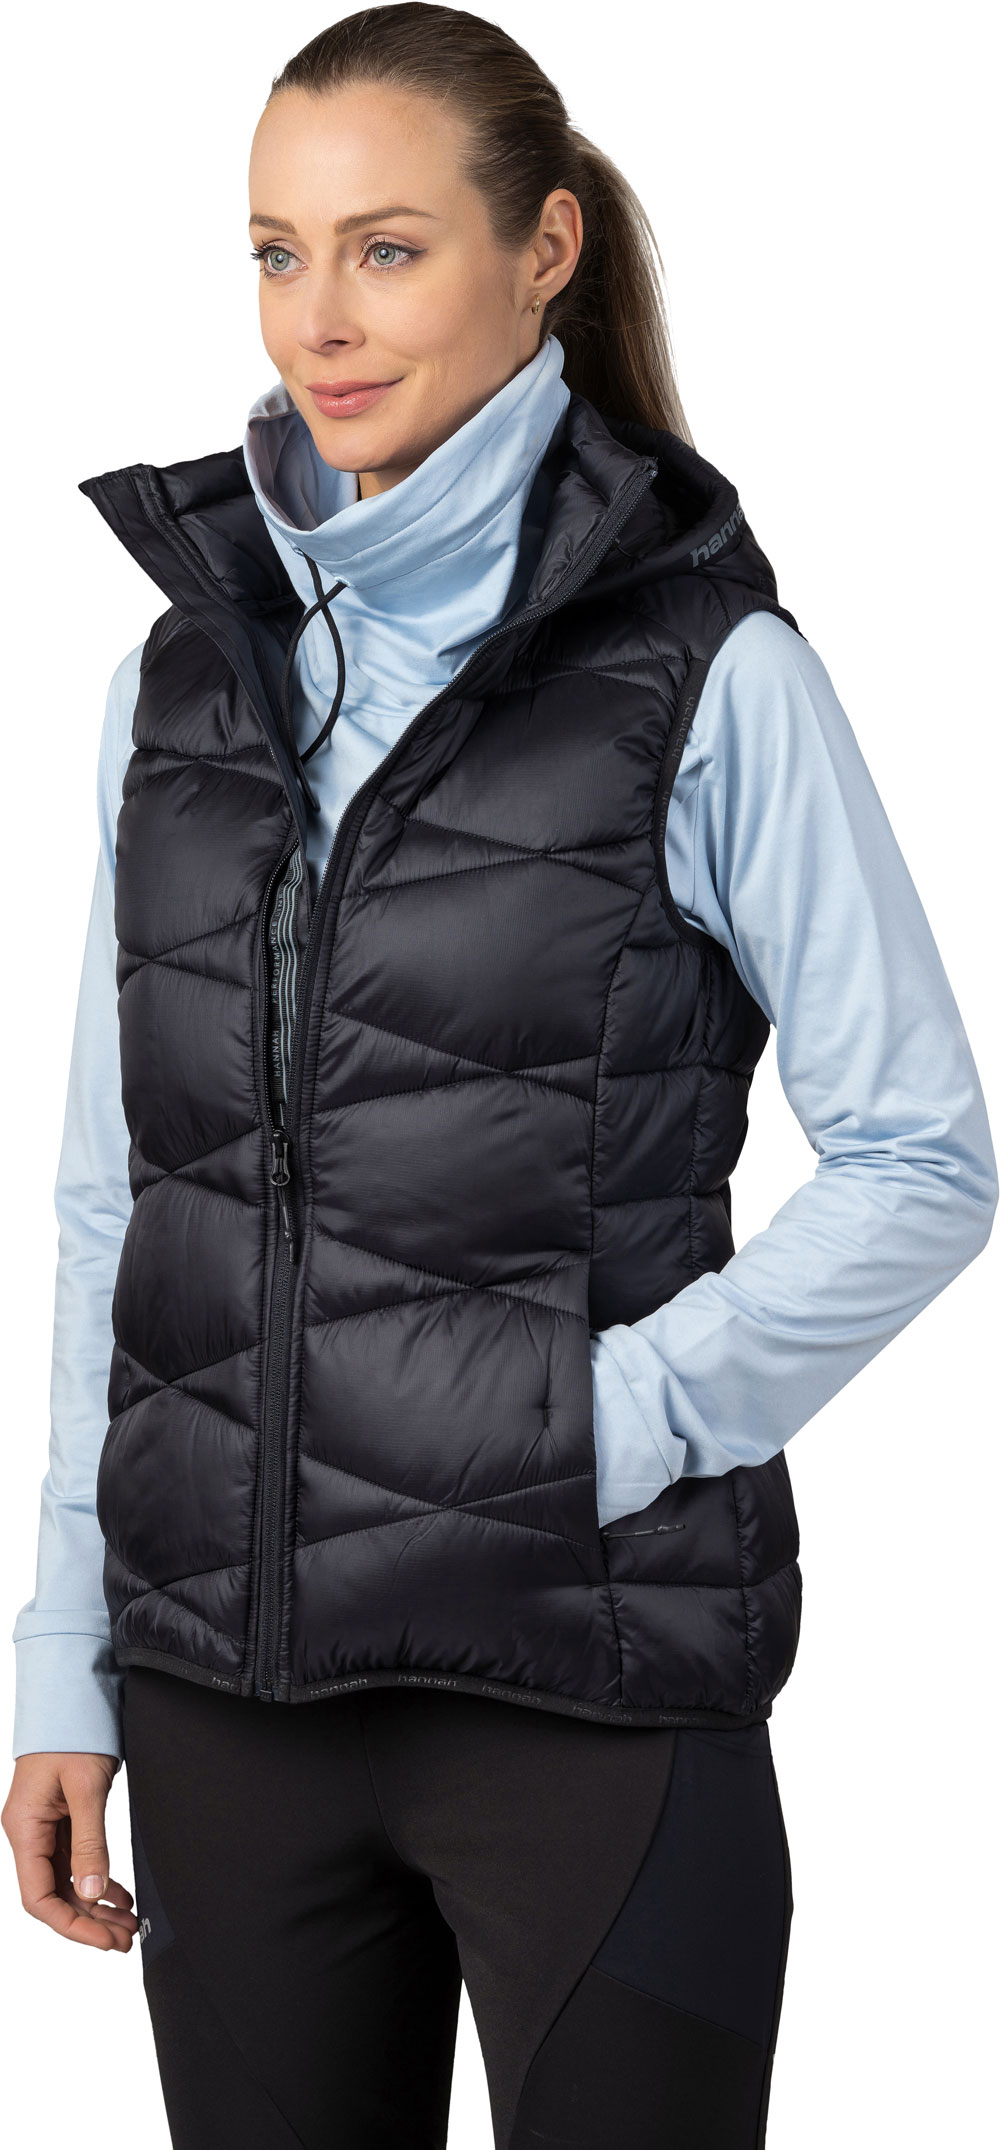 Women’s insulated vest